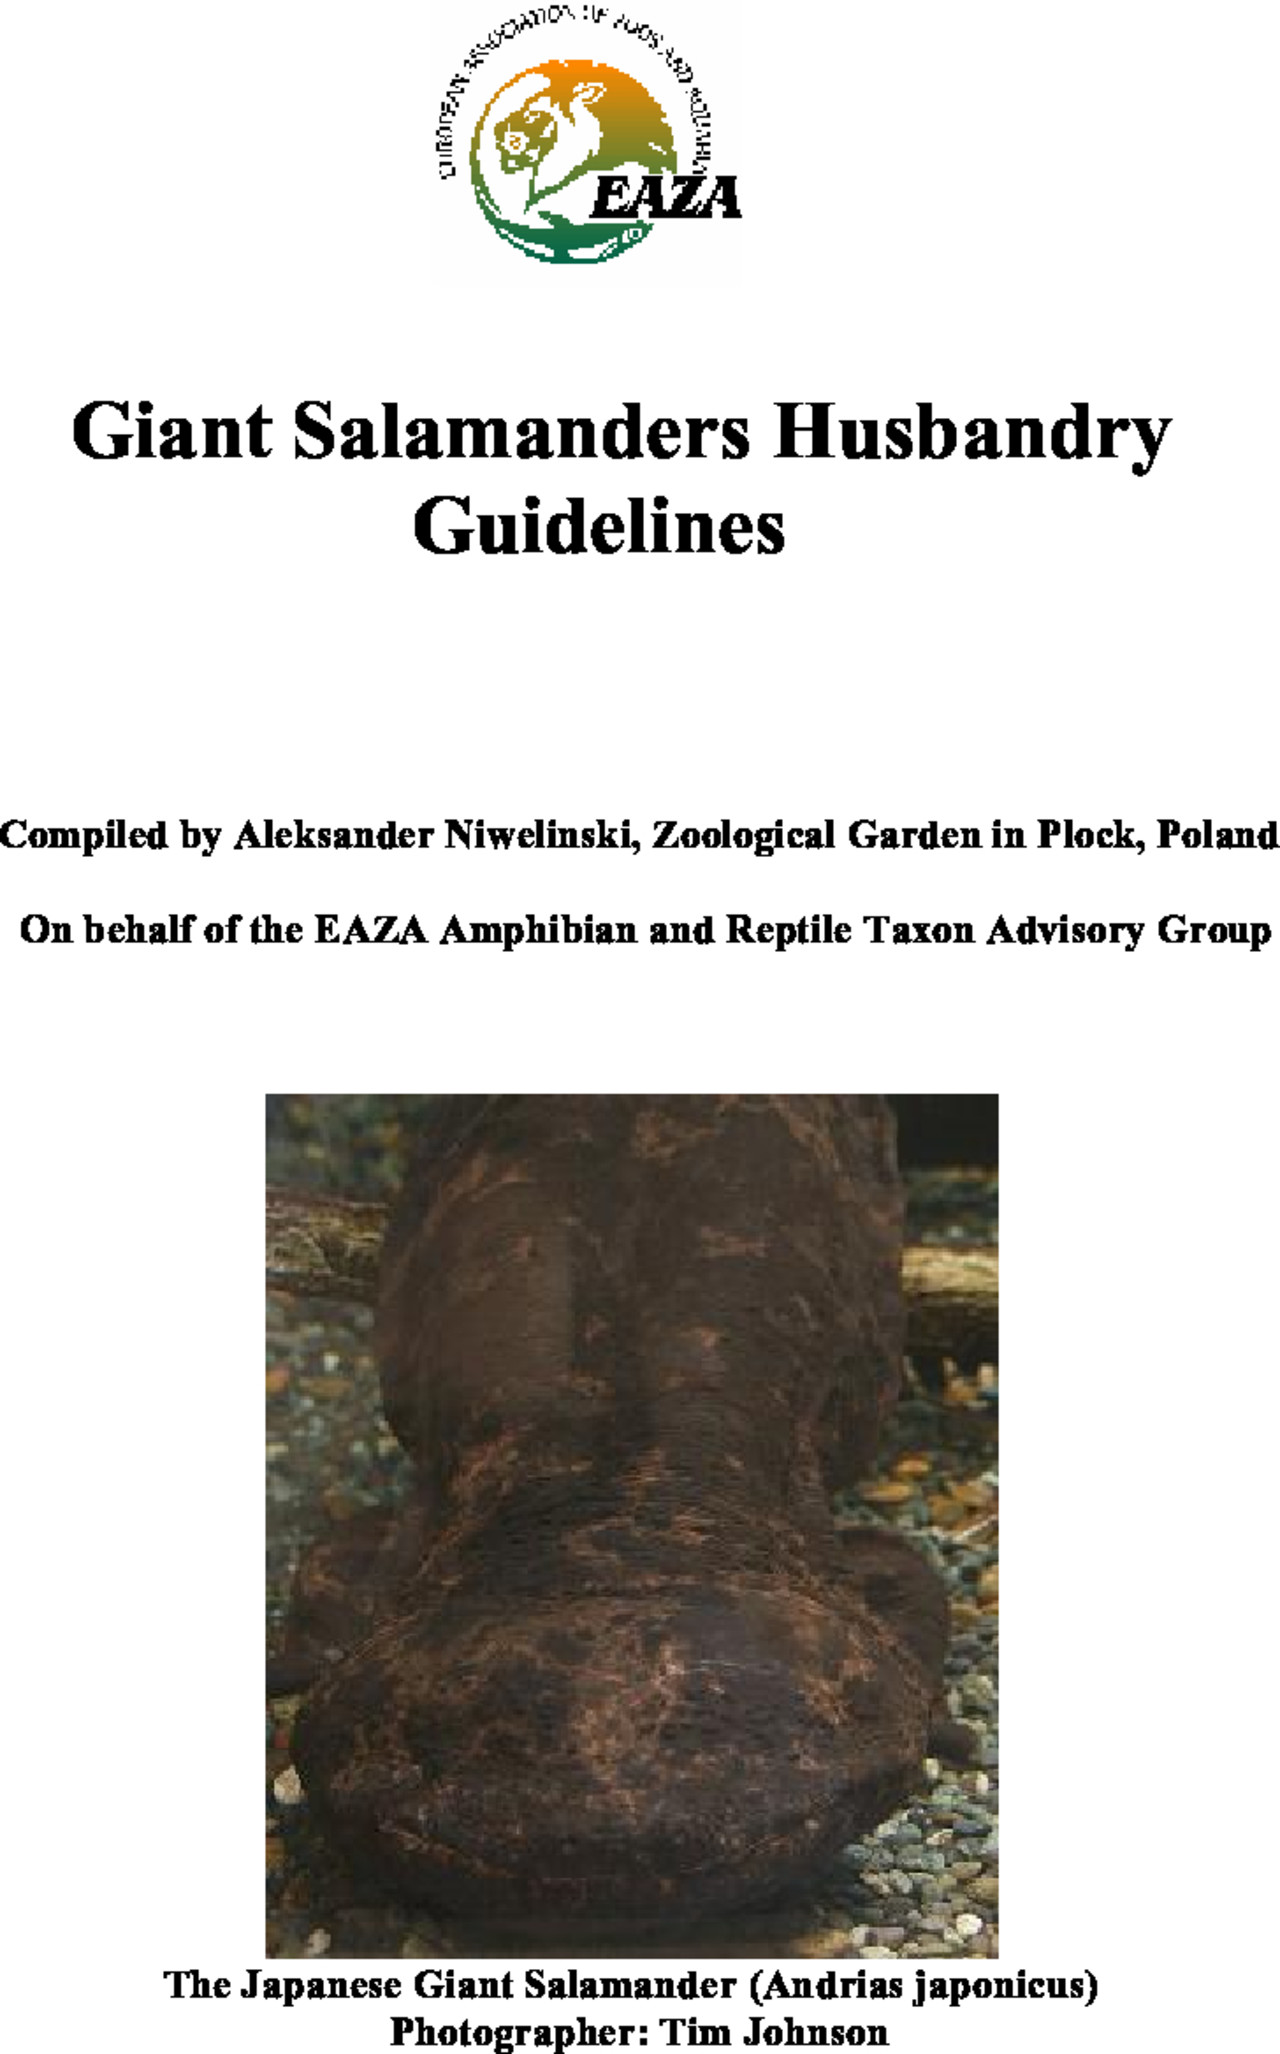 Aleksander Niwelinski - ”Giant Salamanders Husbandry Guidelines” /EAZA Amphibian and Reptile Taxon Advisory Group/